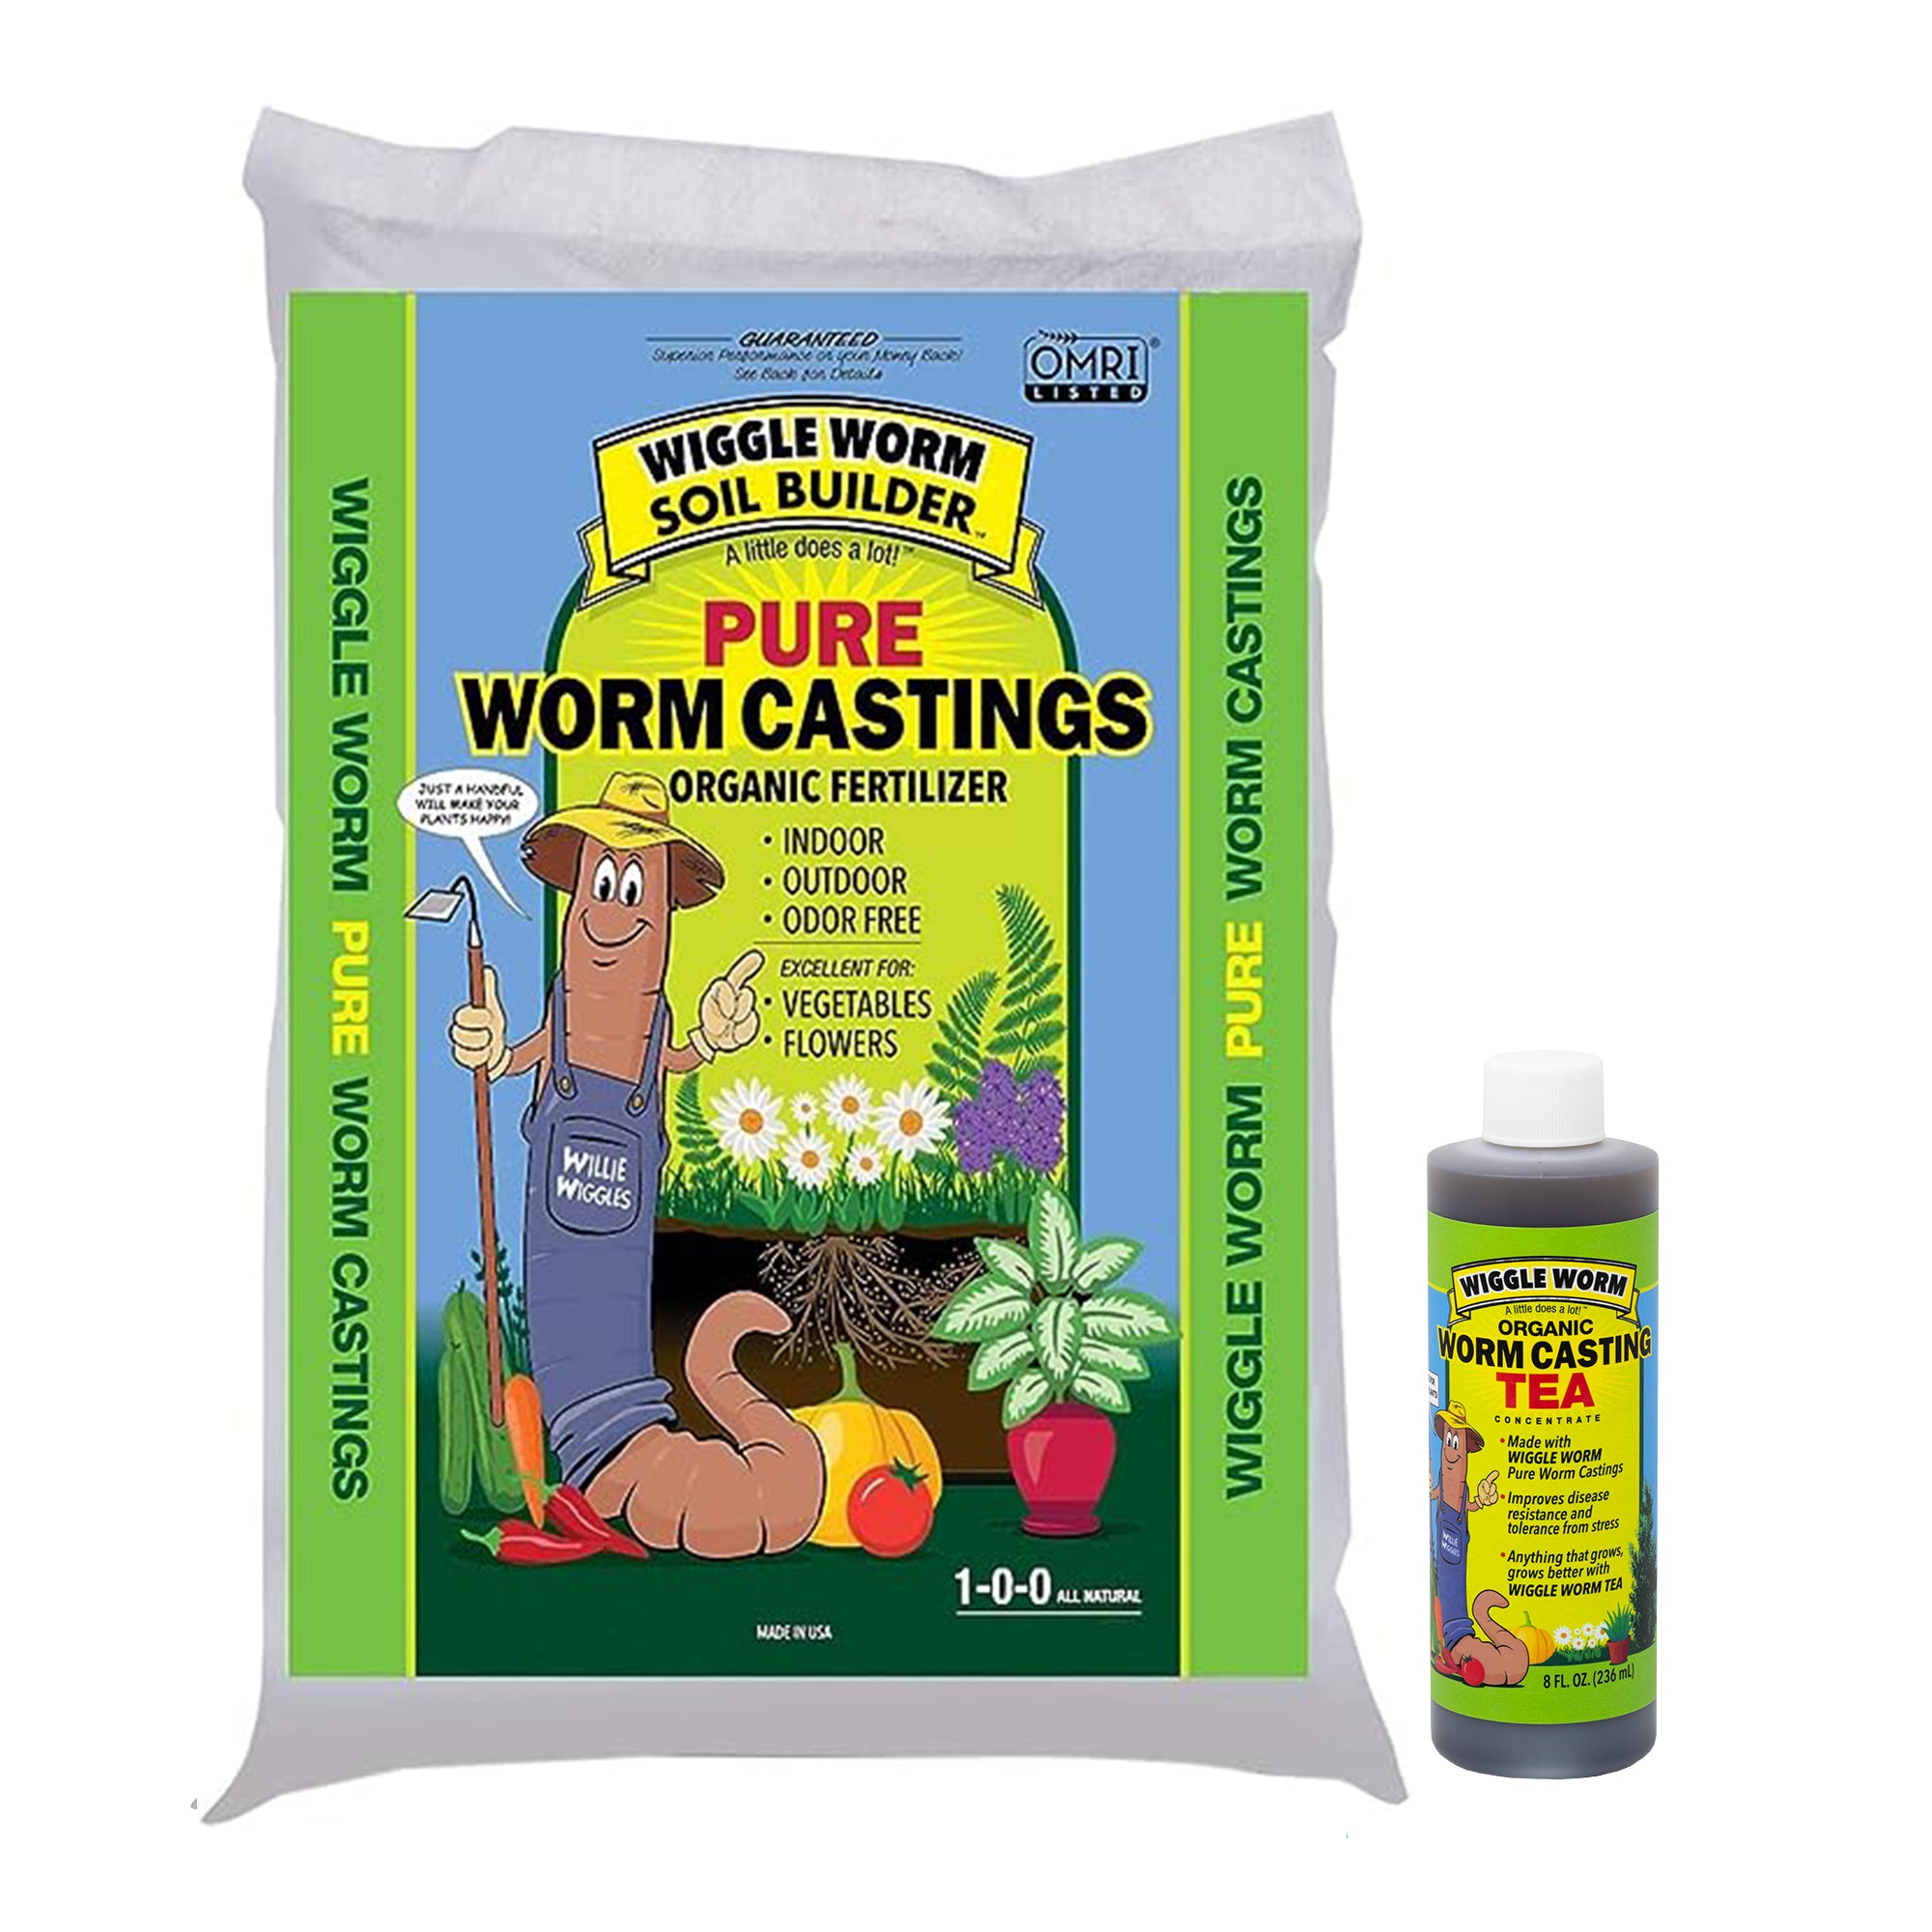 WIGGLE WORM Soil Builder Earthworm Castings Organic Fertilizer (15 lb) and WIGGLE WORM Castings Tea (8 Oz)